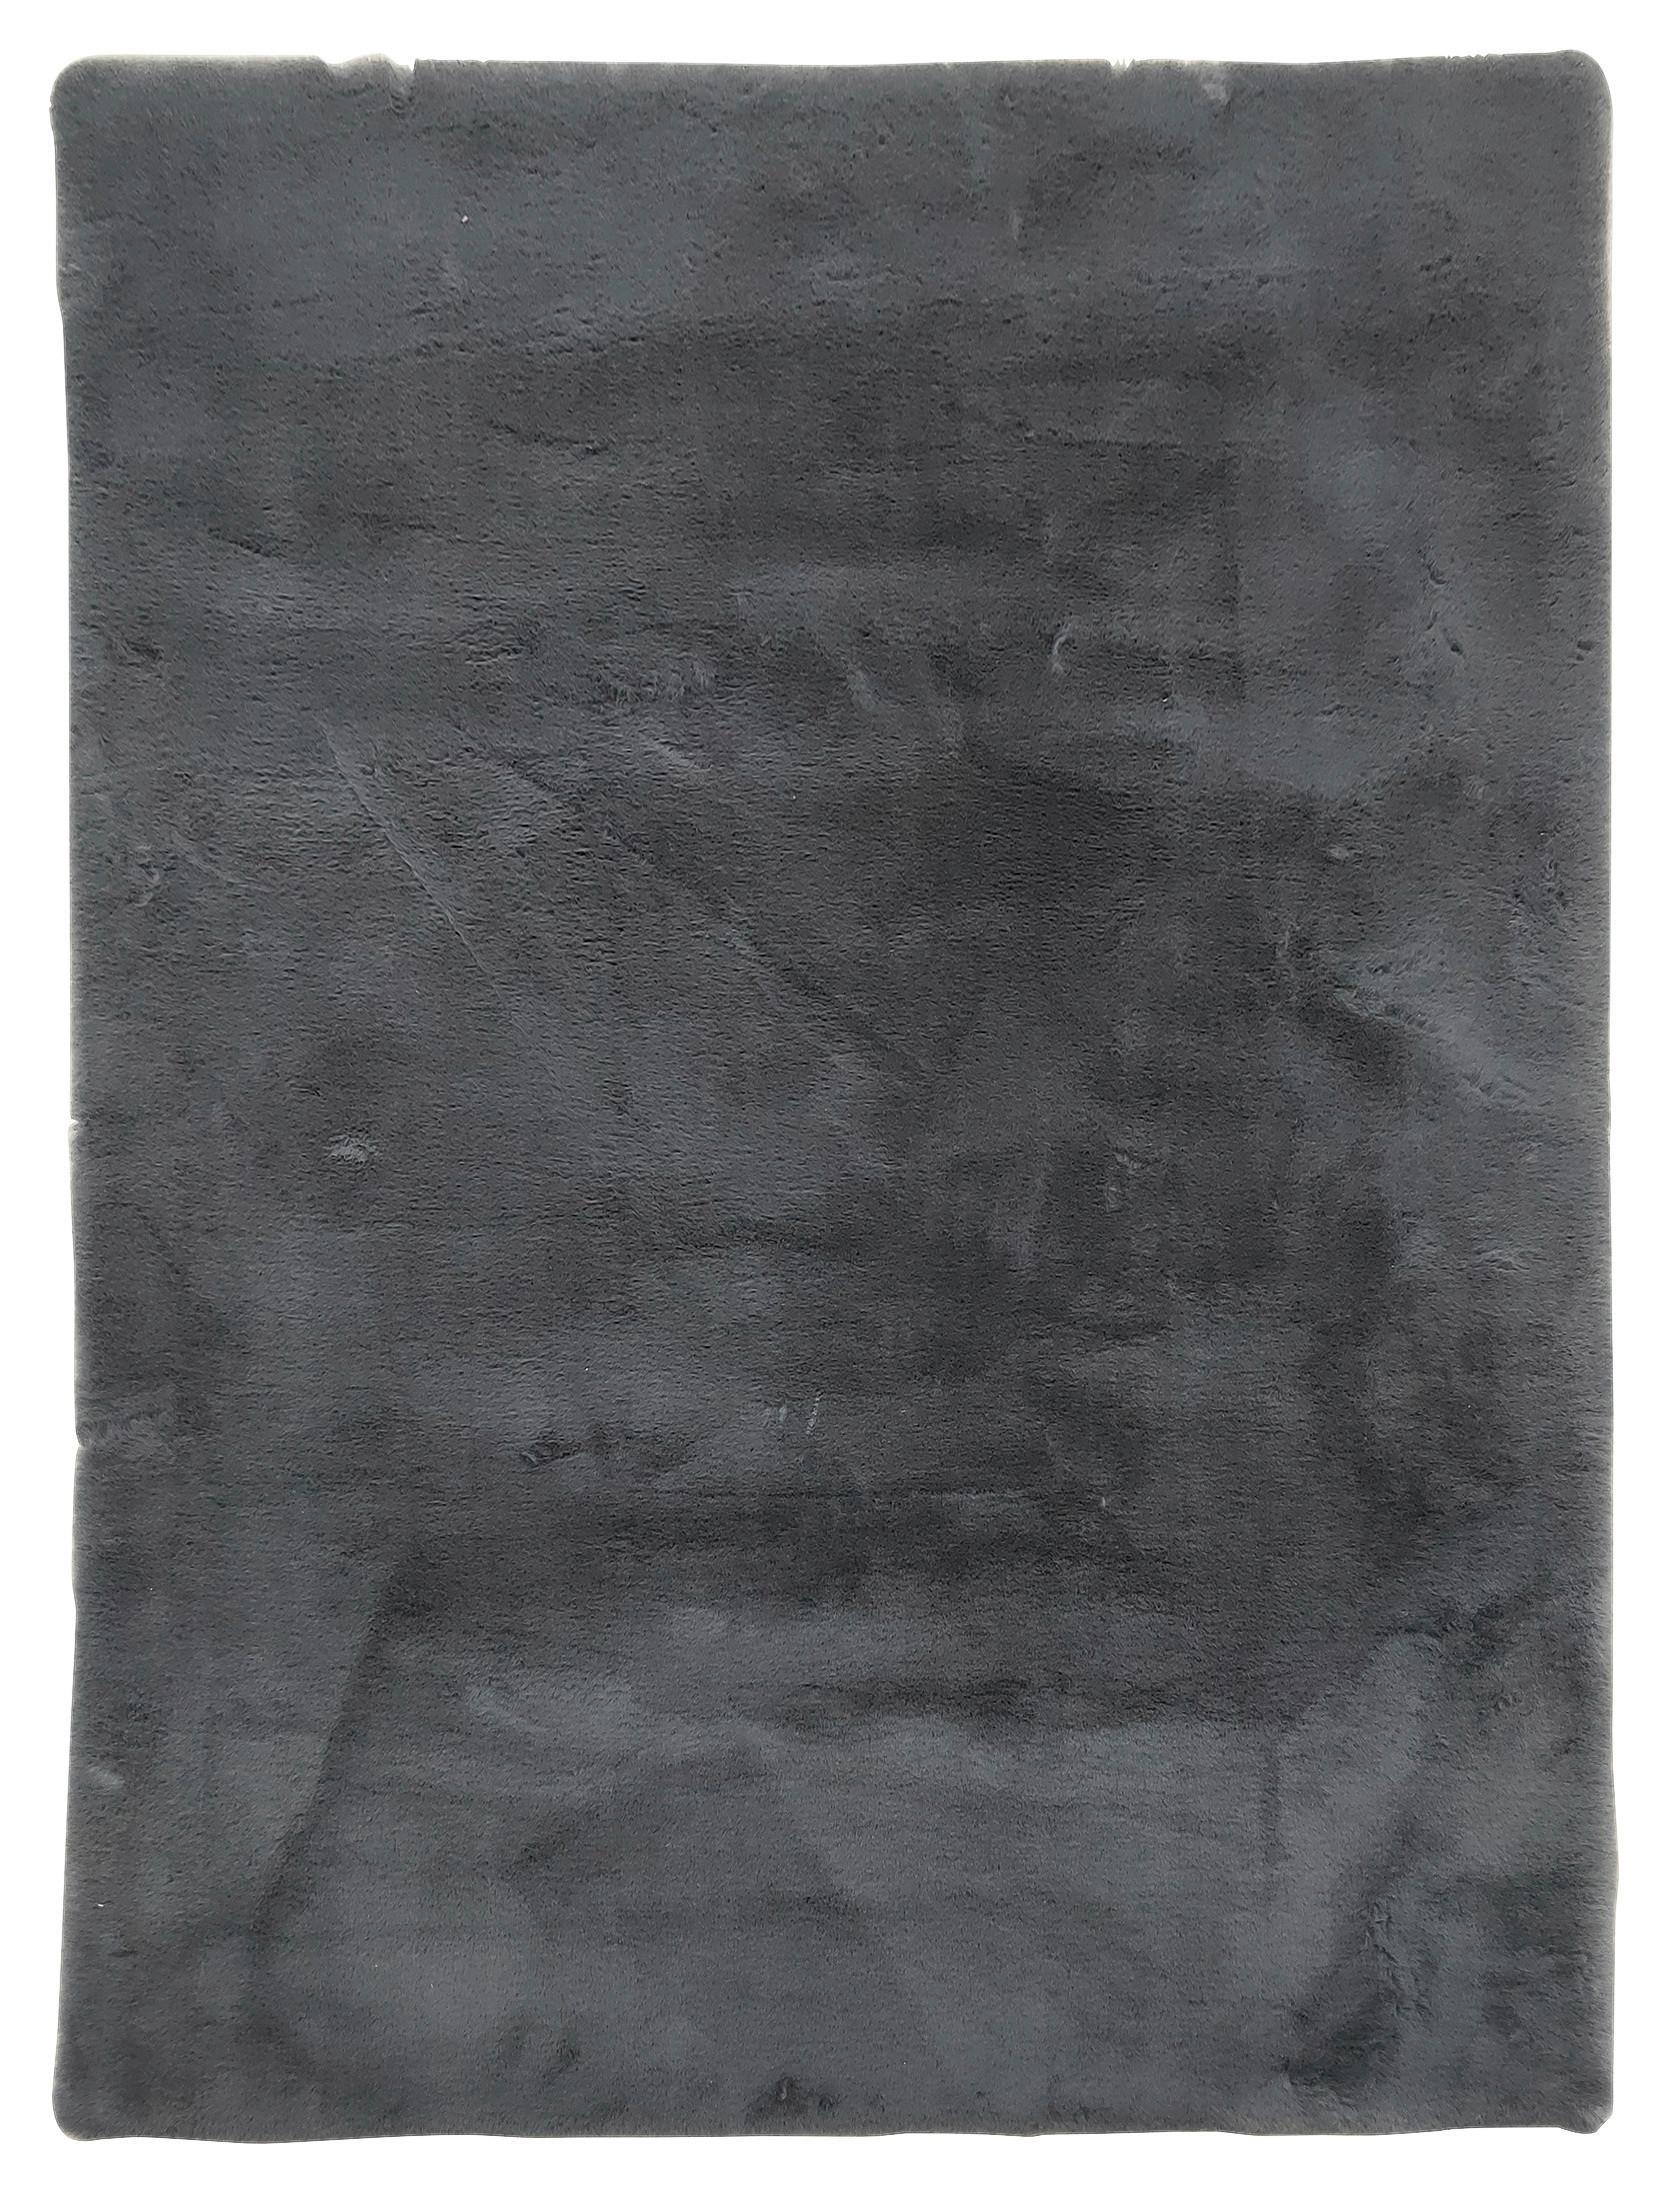 Umelá Kožušina Caroline 3, 160/220cm - antracitová, textil (160/220cm) - Modern Living